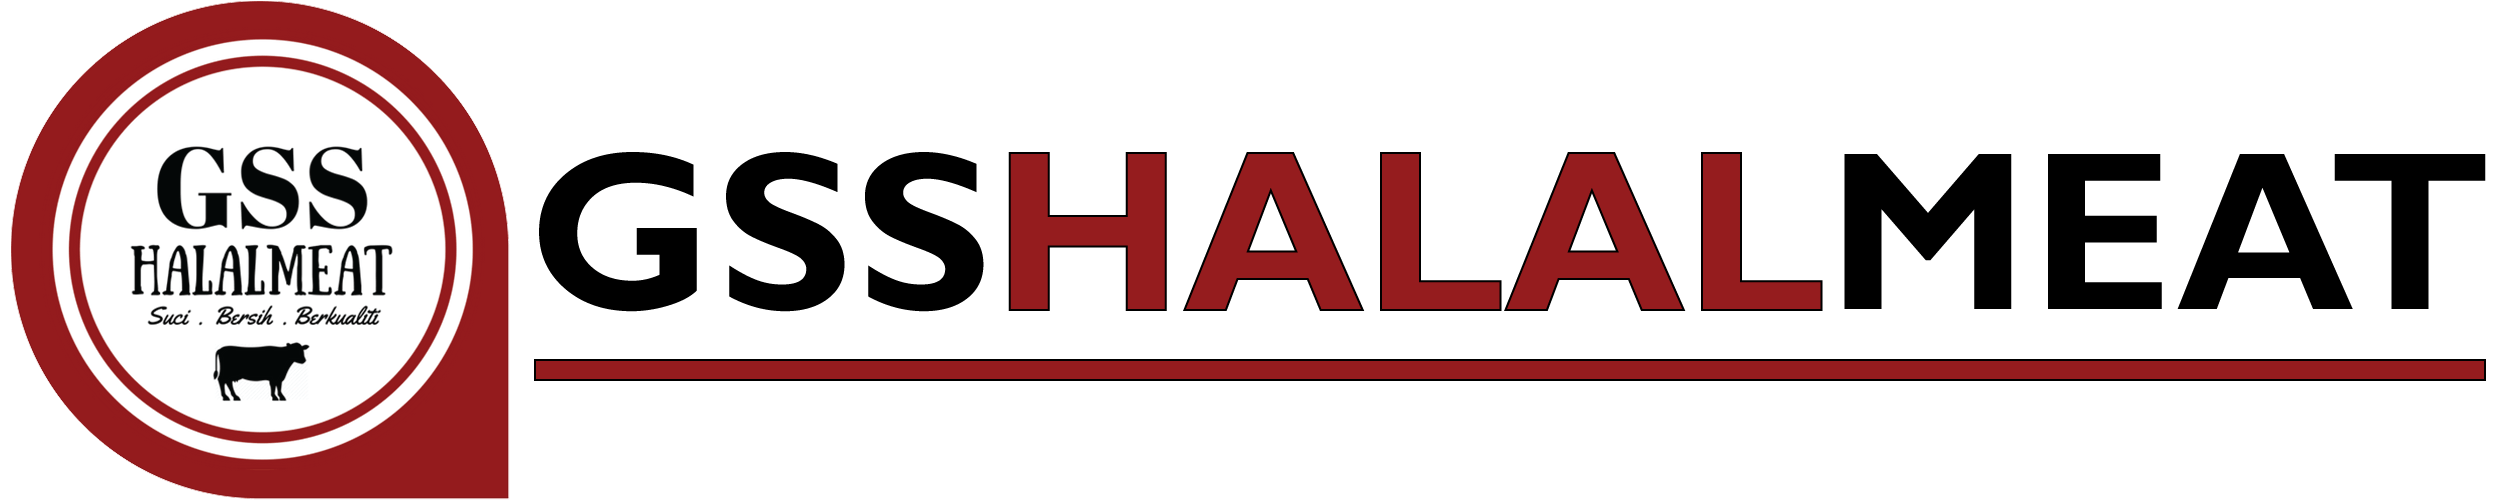 GSS HALAL MEAT